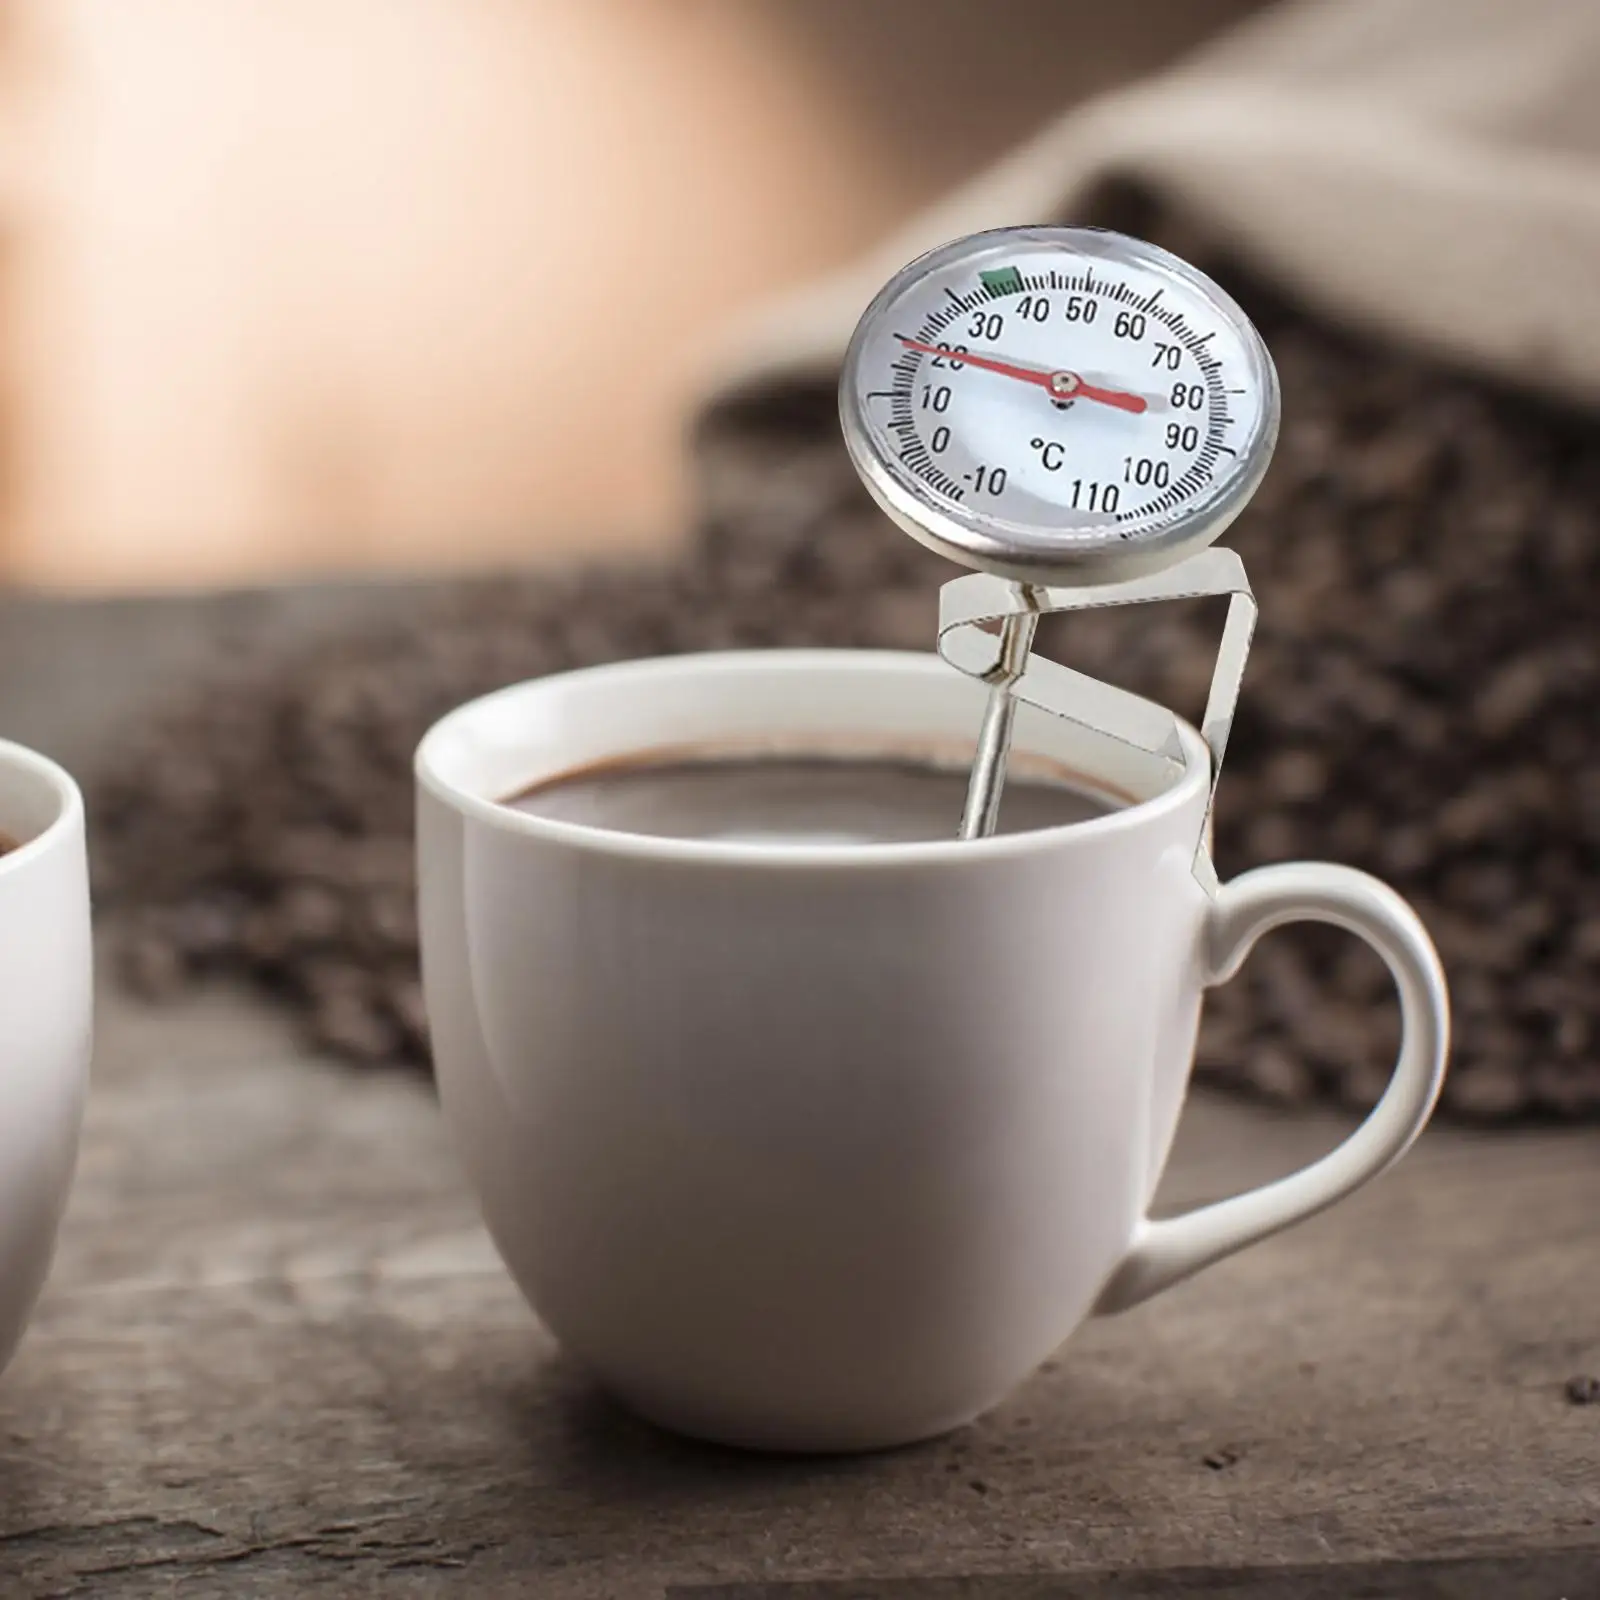 Stainless Steel Food Coffee Drinks Instant Read Chocolate Milk Foam Monitoring Foam